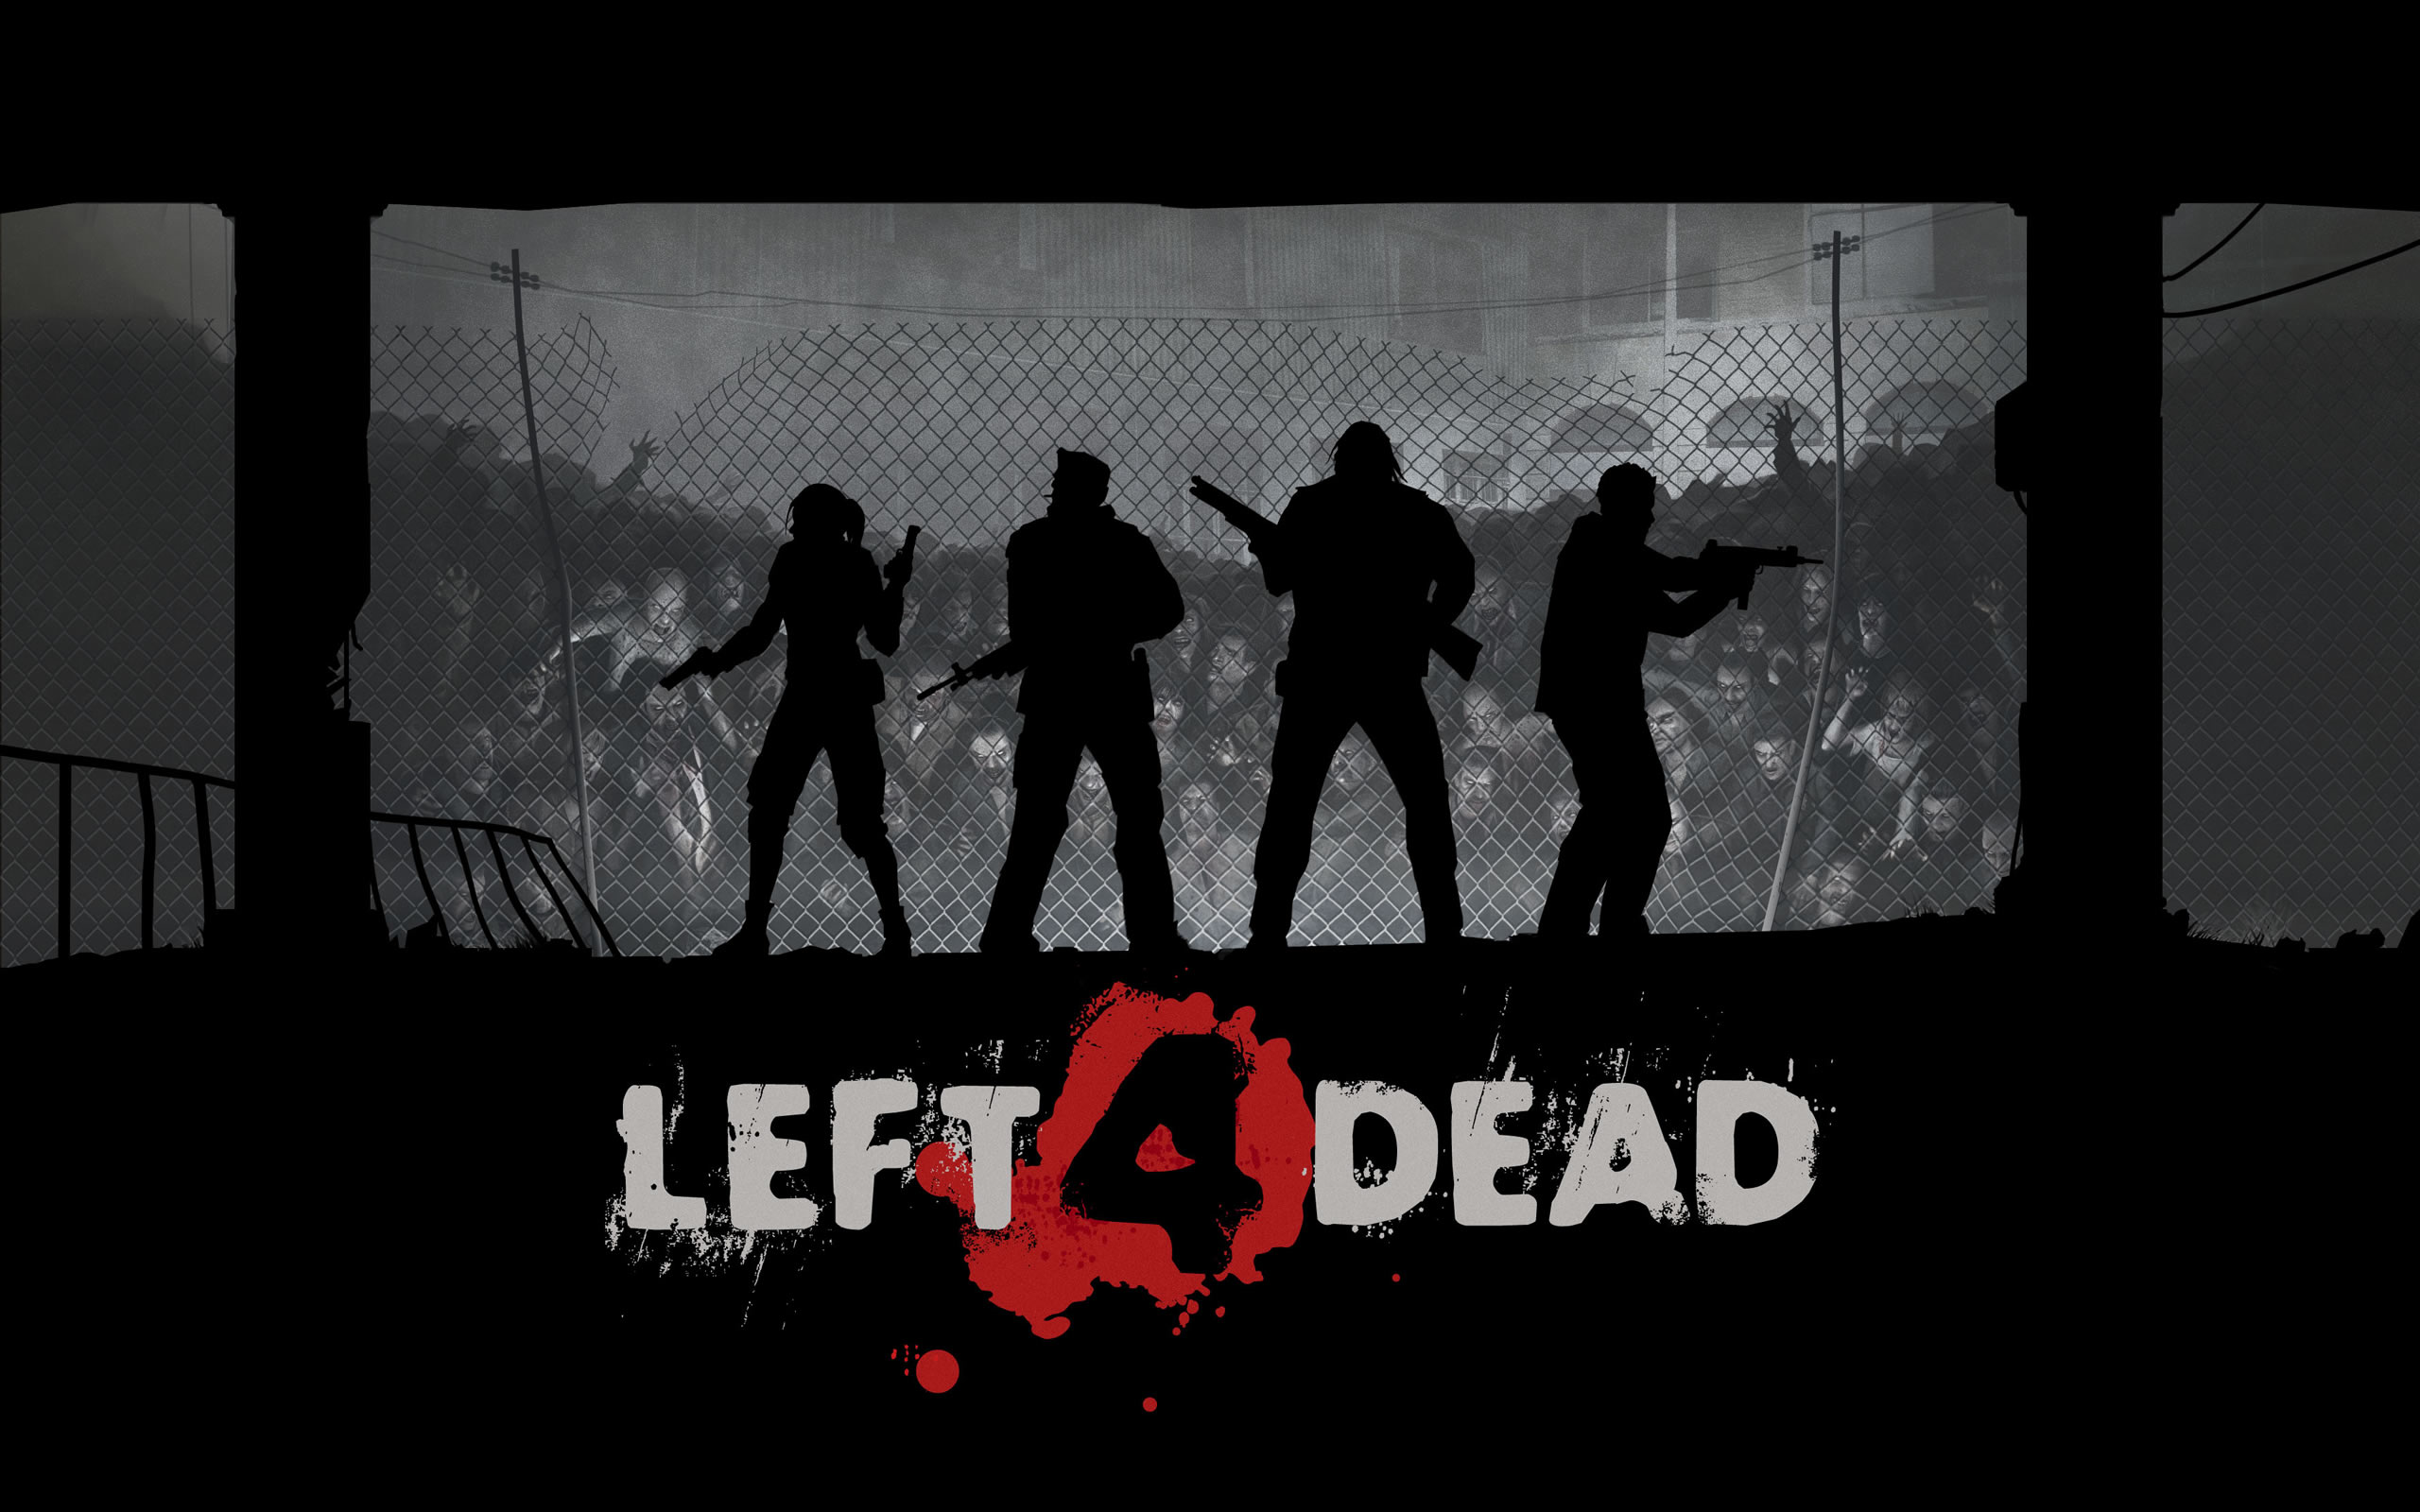 Left 4 Dead - обои на рабочий стол